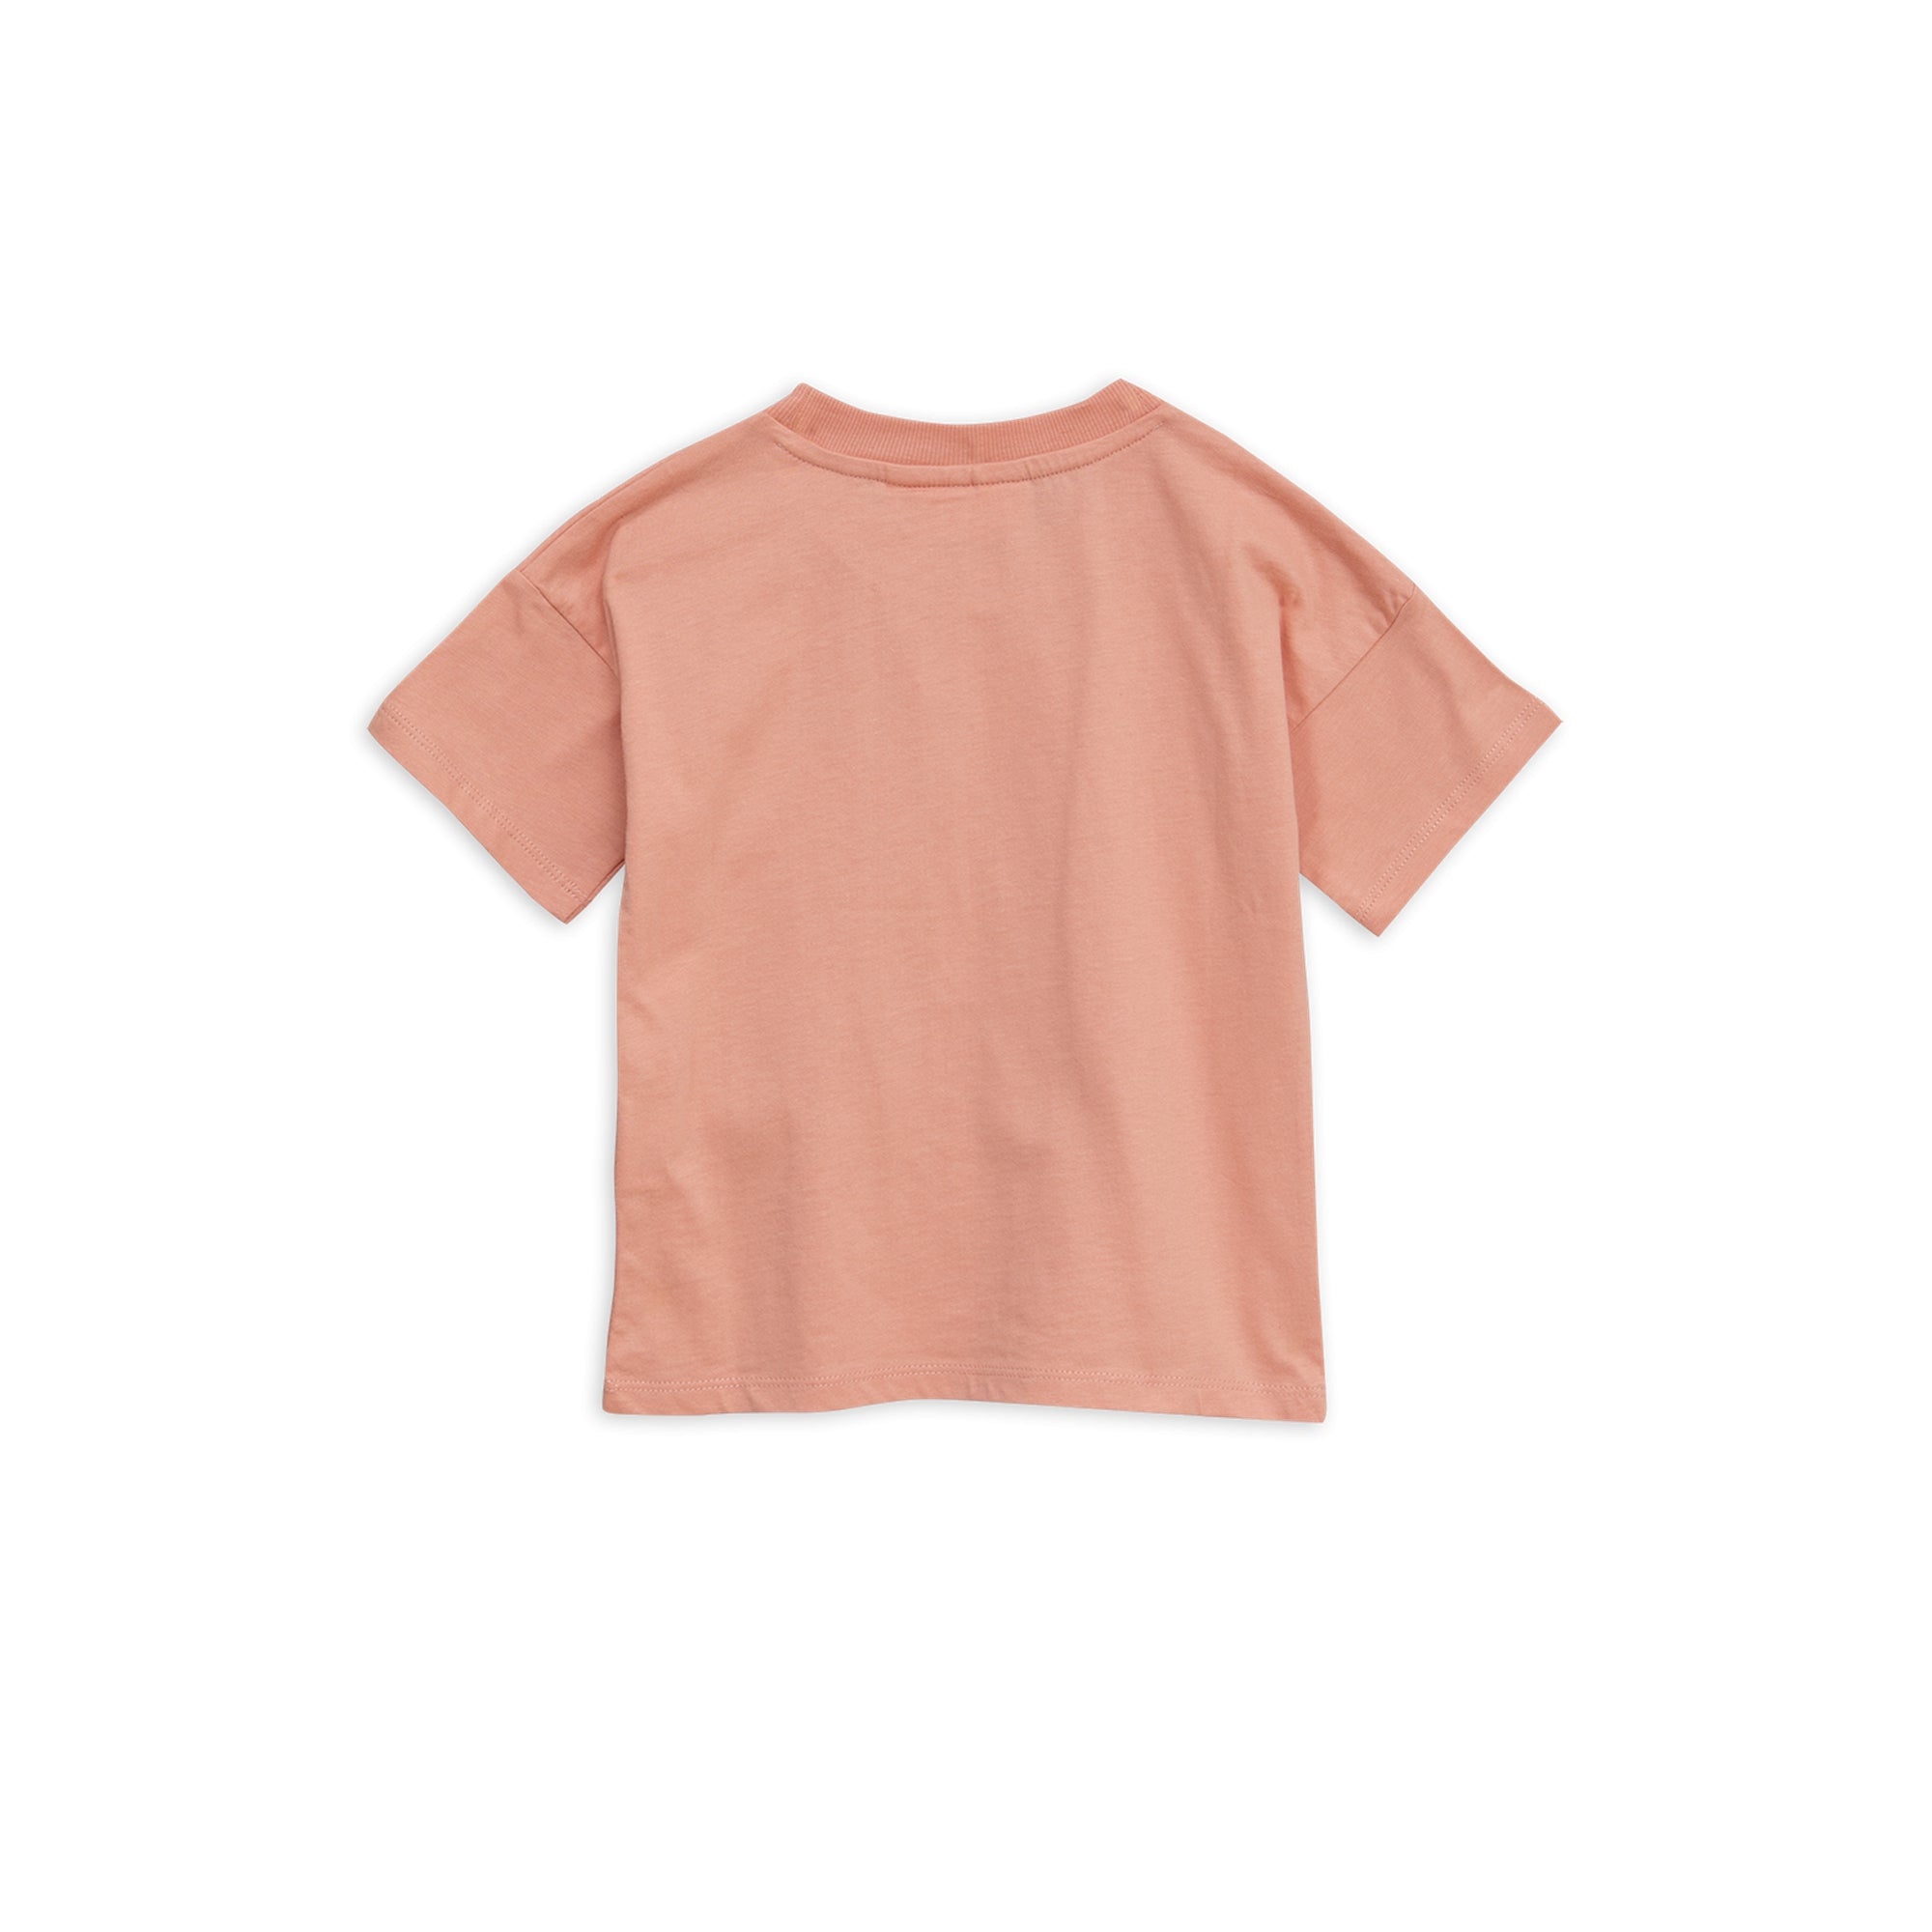 Girls Pink Cotton T-Shirts